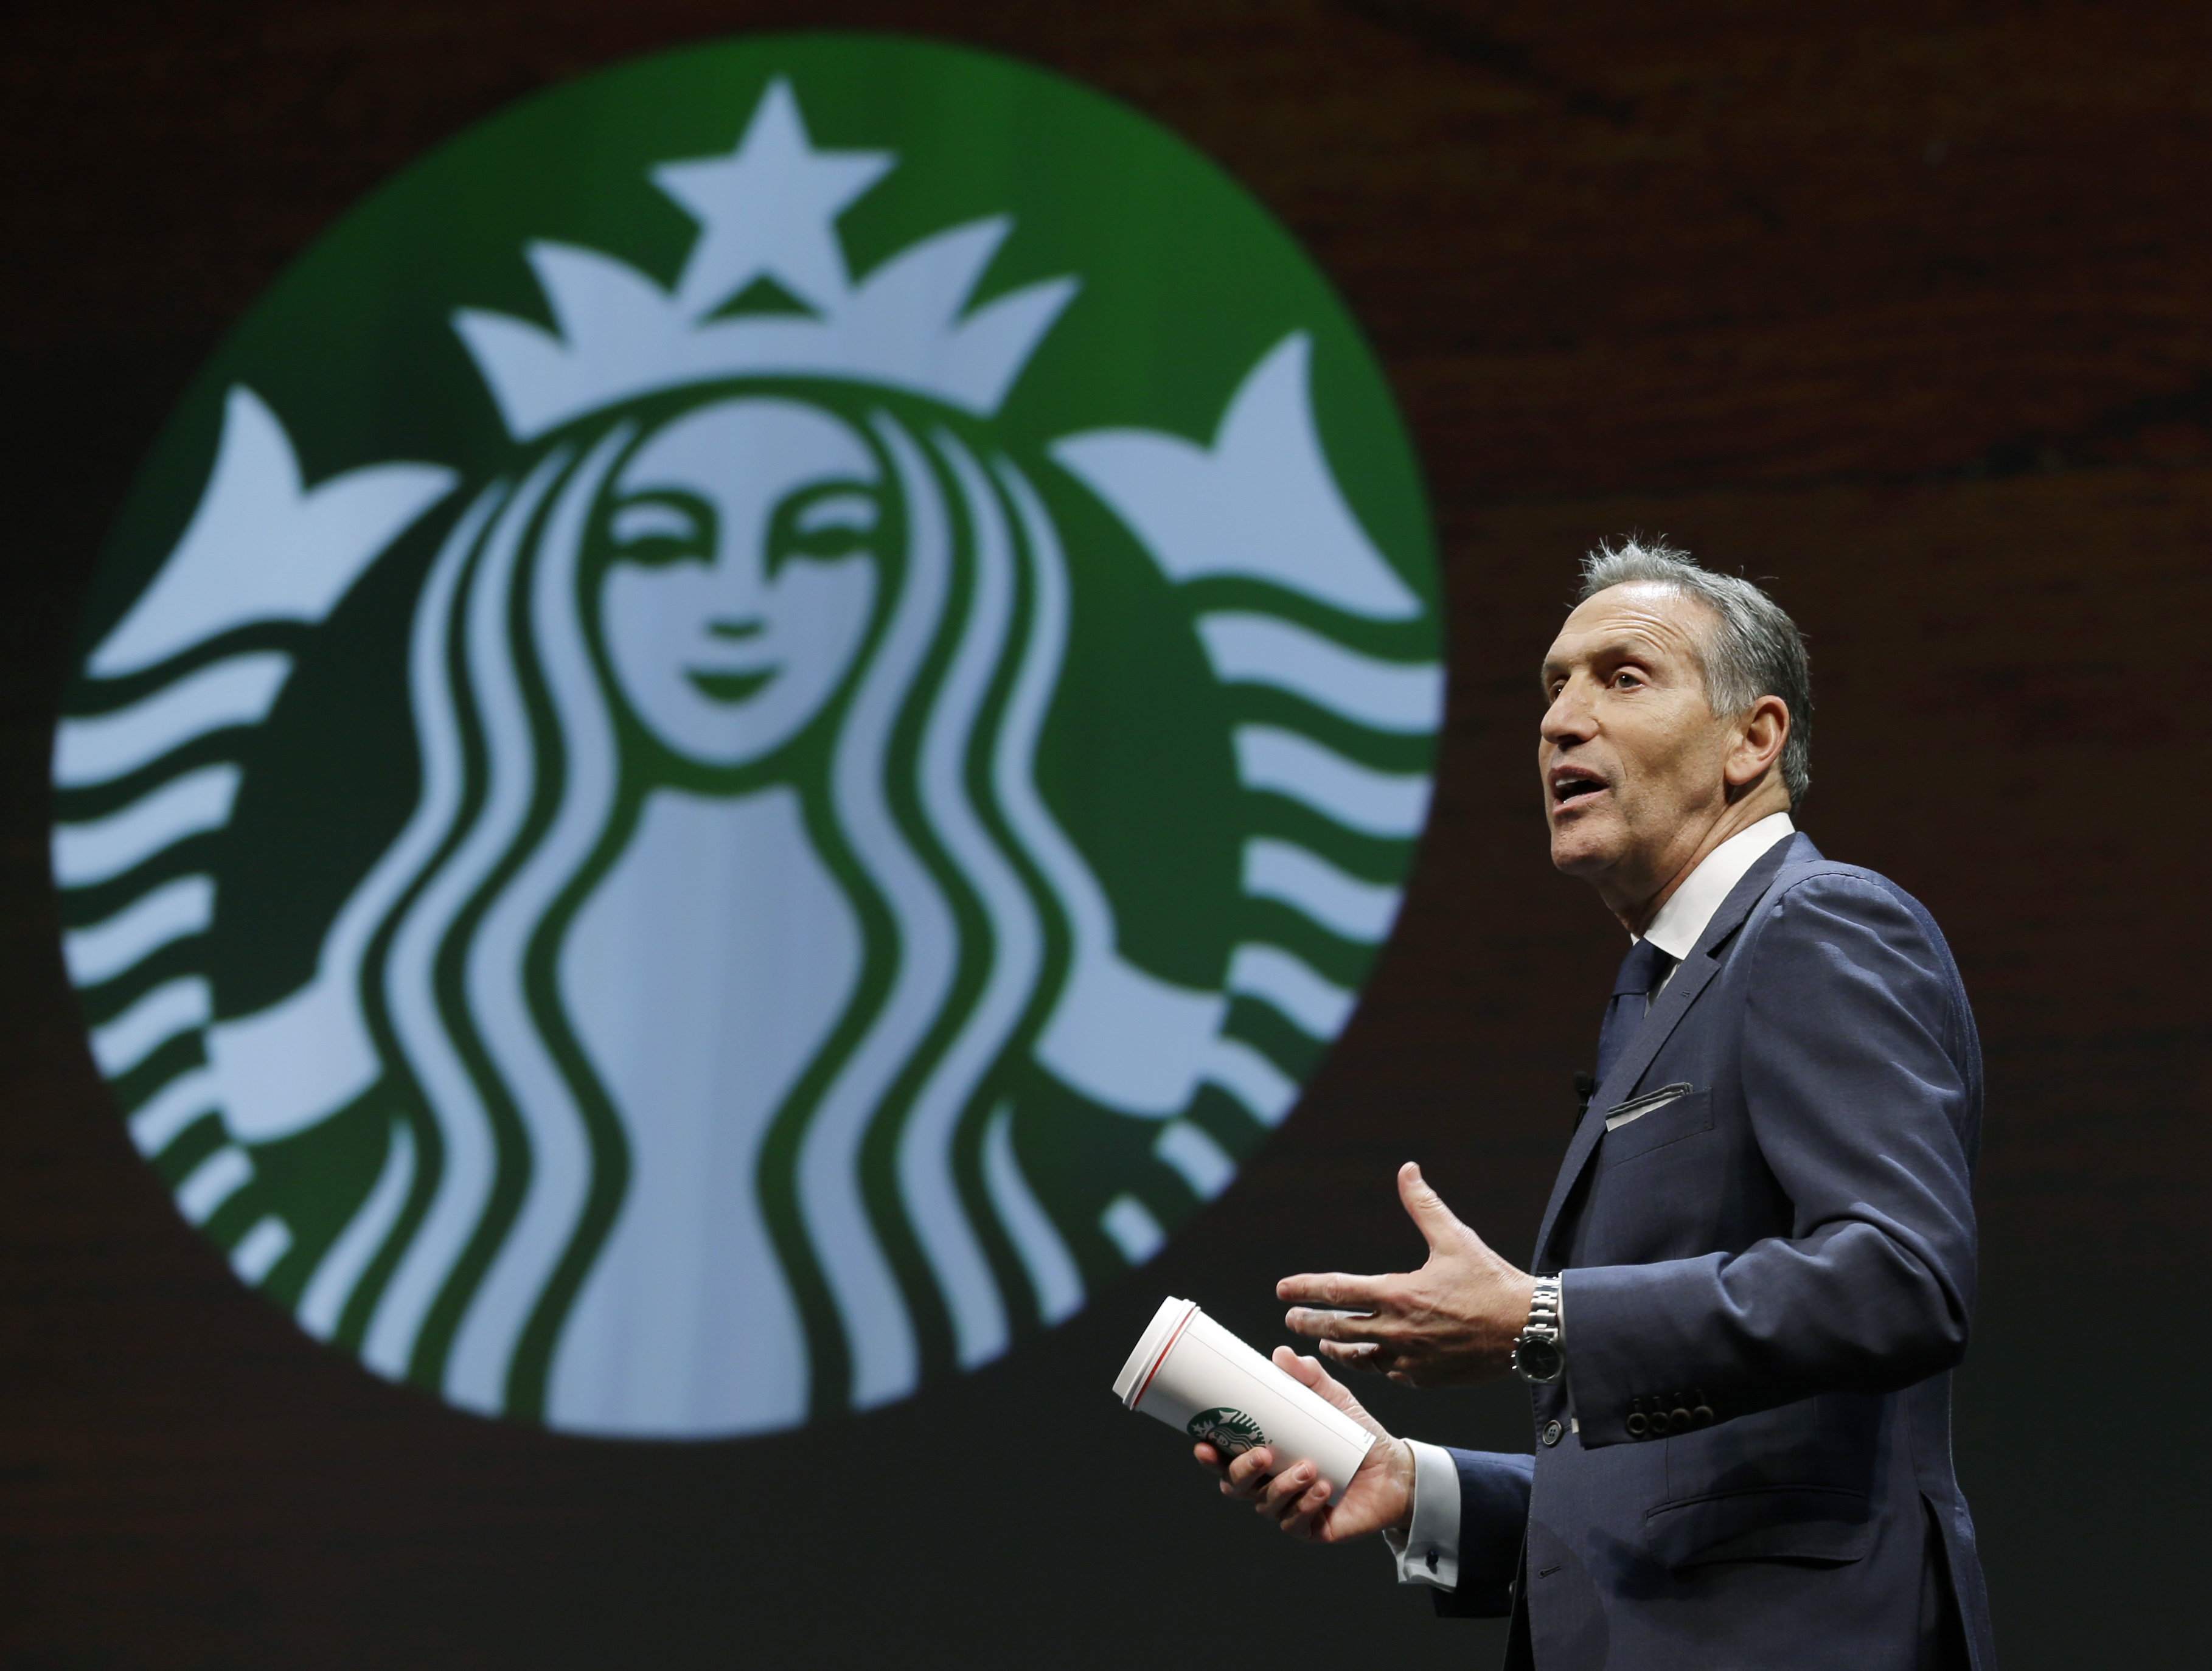 Howard Schultz and the Starbucks logo 